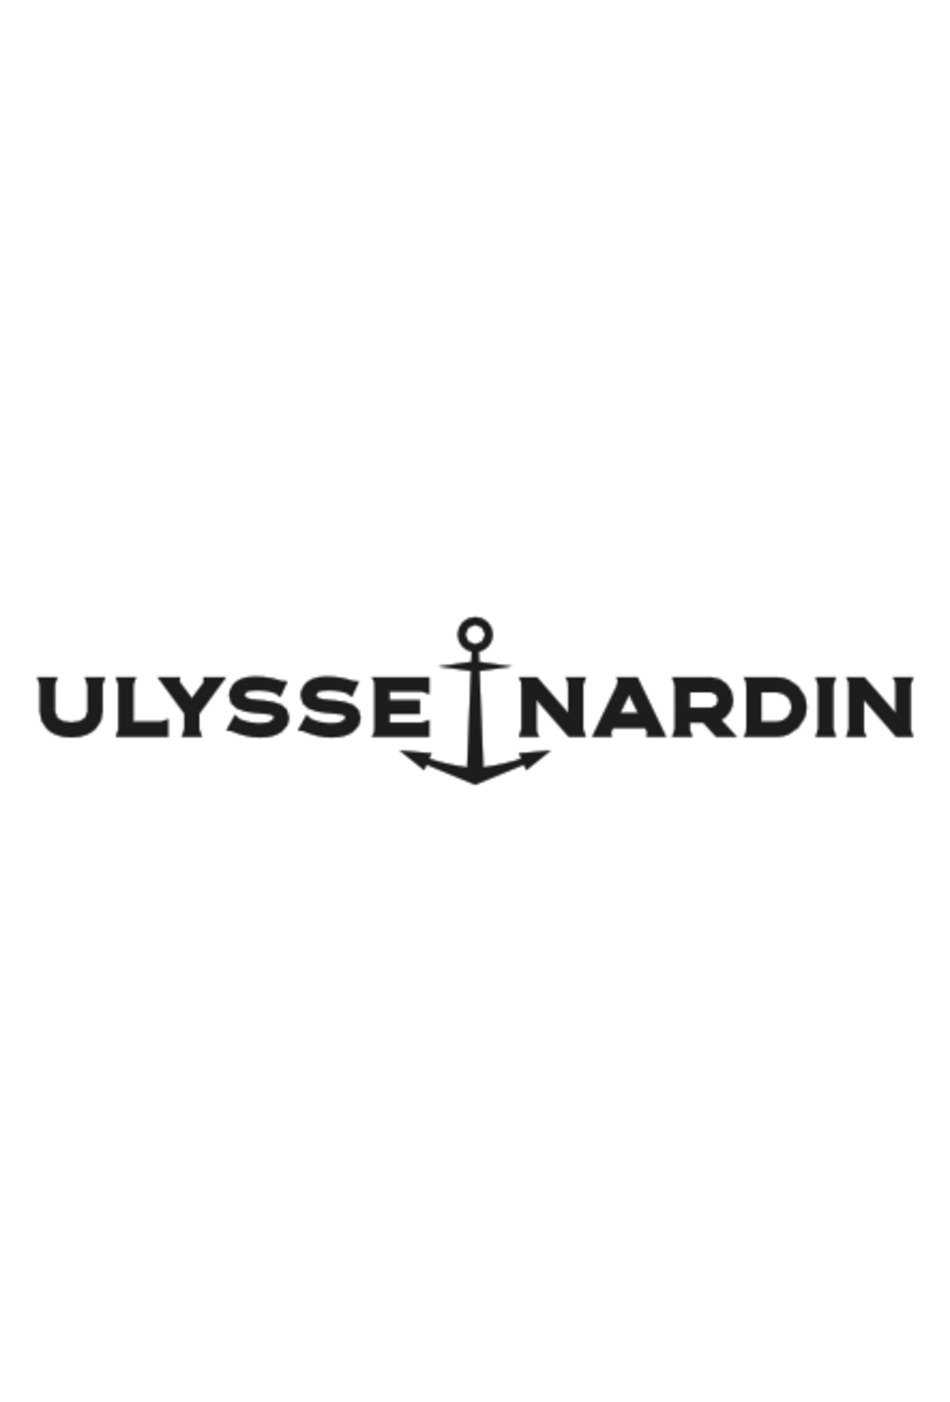 Ulysse Nardin логотип